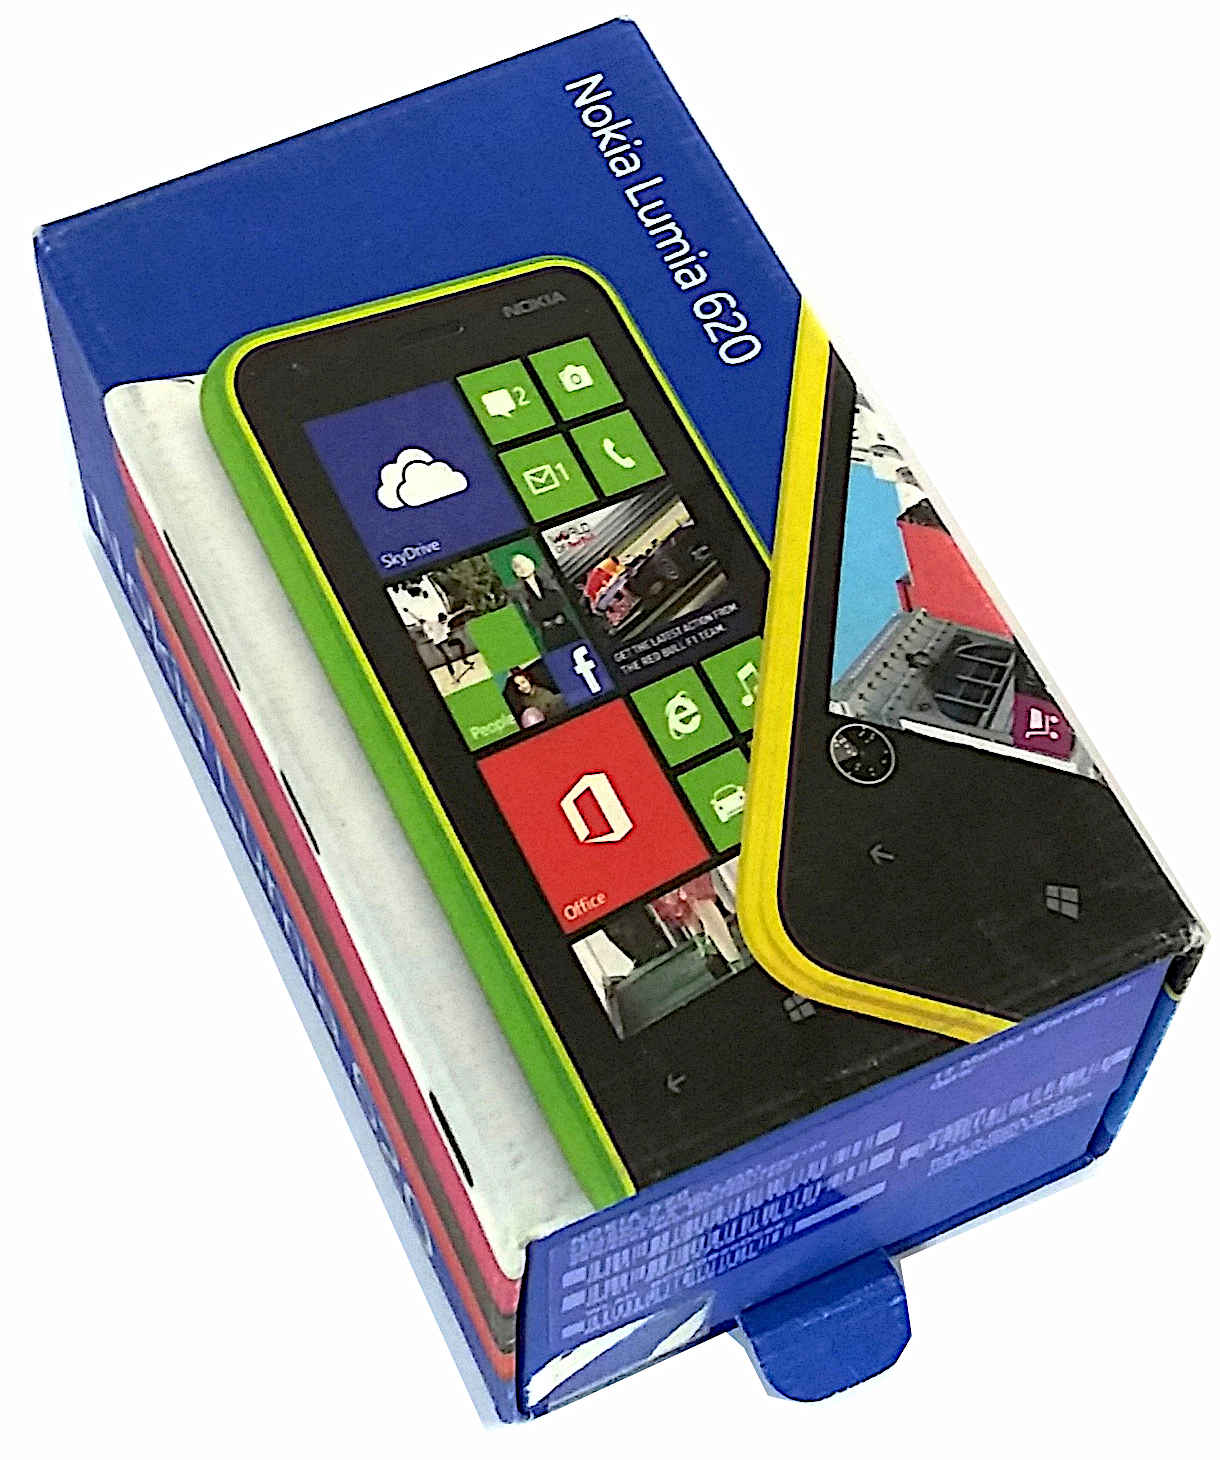 Lumia-620-Retail-Box.jpg